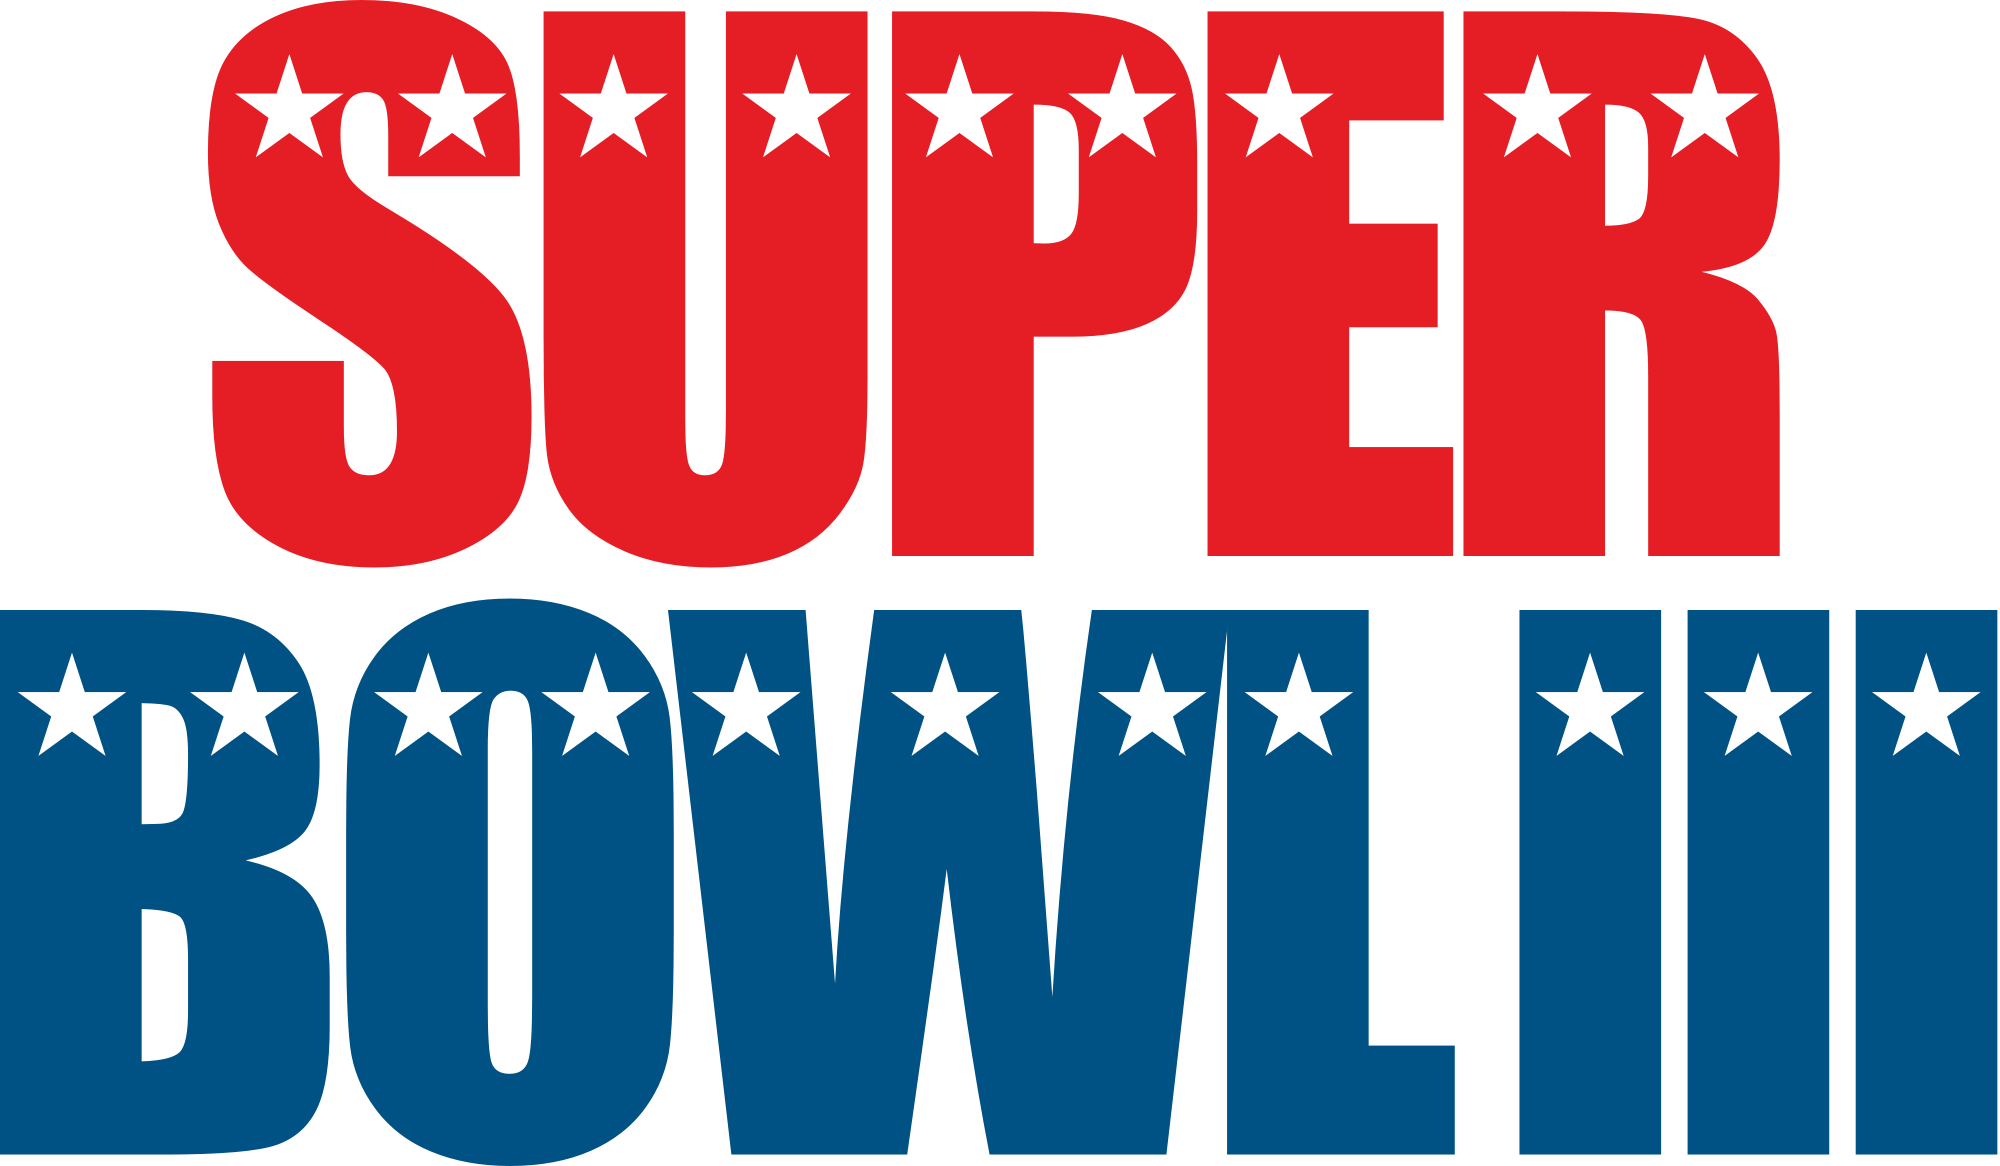 III Logo - Super Bowl III logo.svg